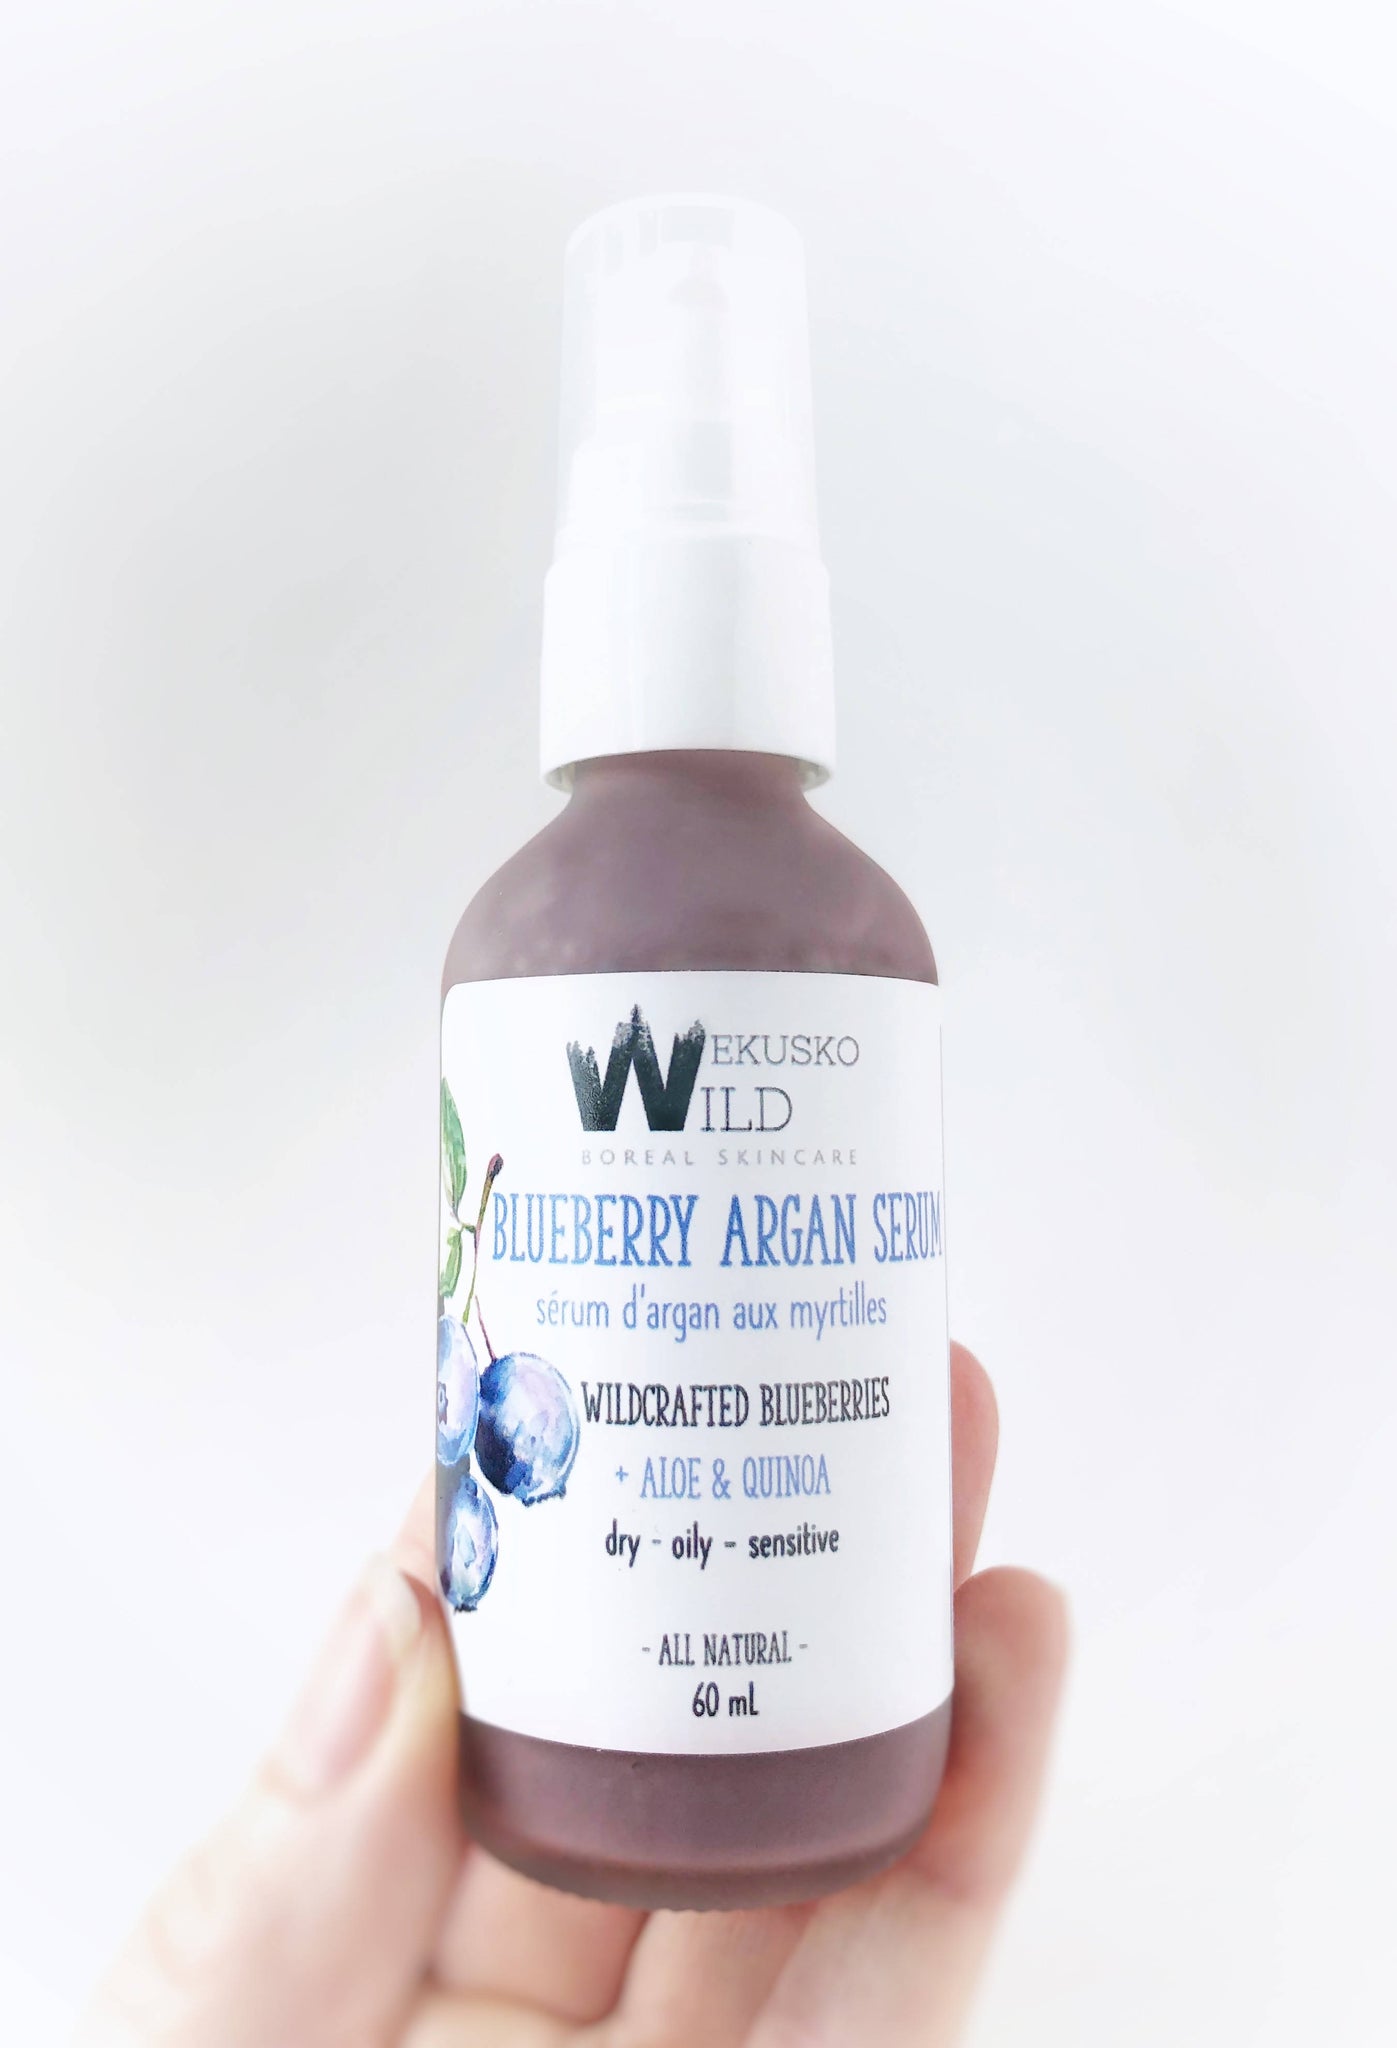 blueberry argan serum - WEKUSKO WILD Boreal Skincare